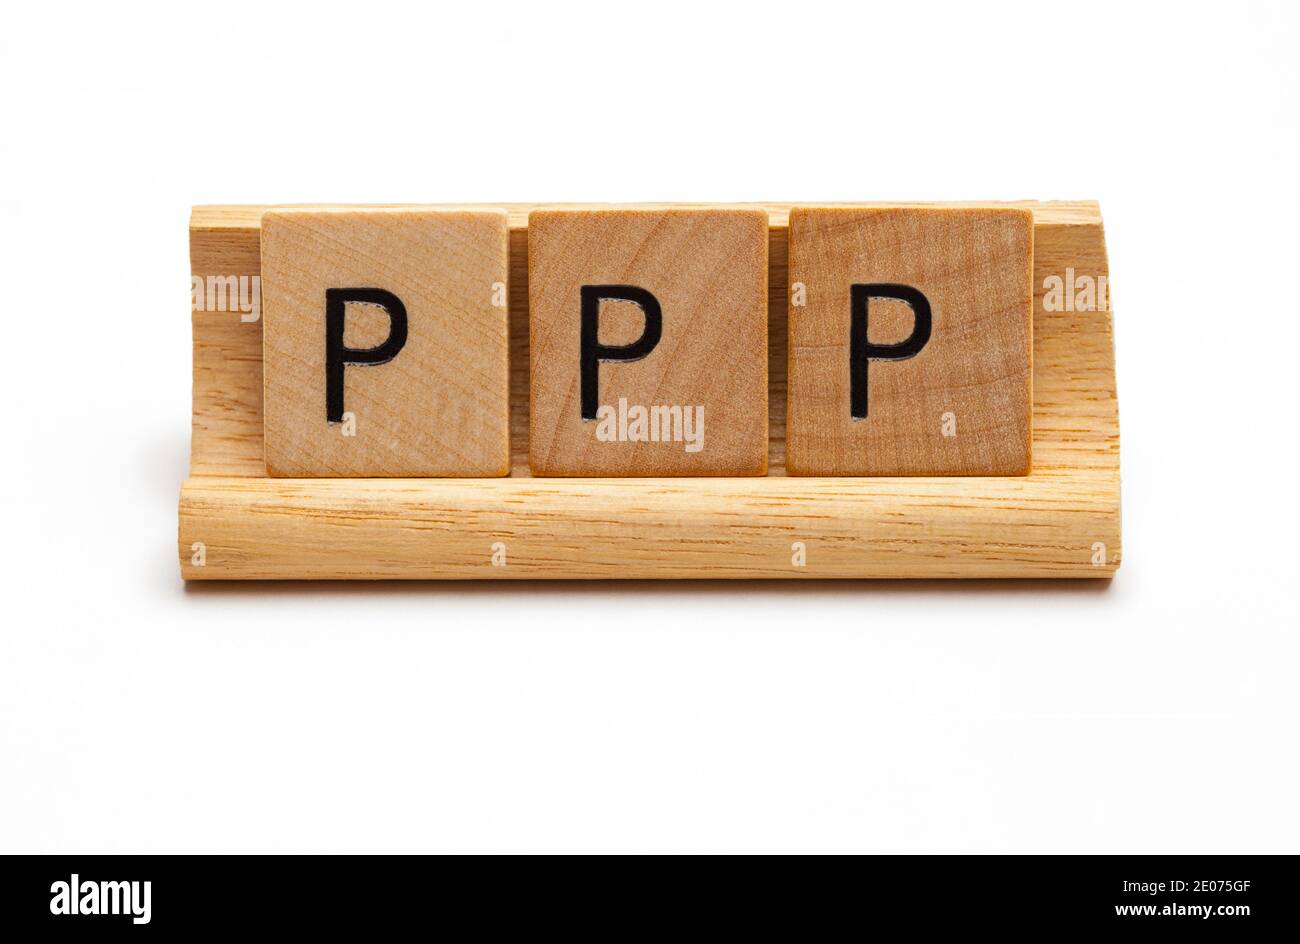 Wood Letter Blocks Rechtschreibung PPP ausschneiden. Stockfoto